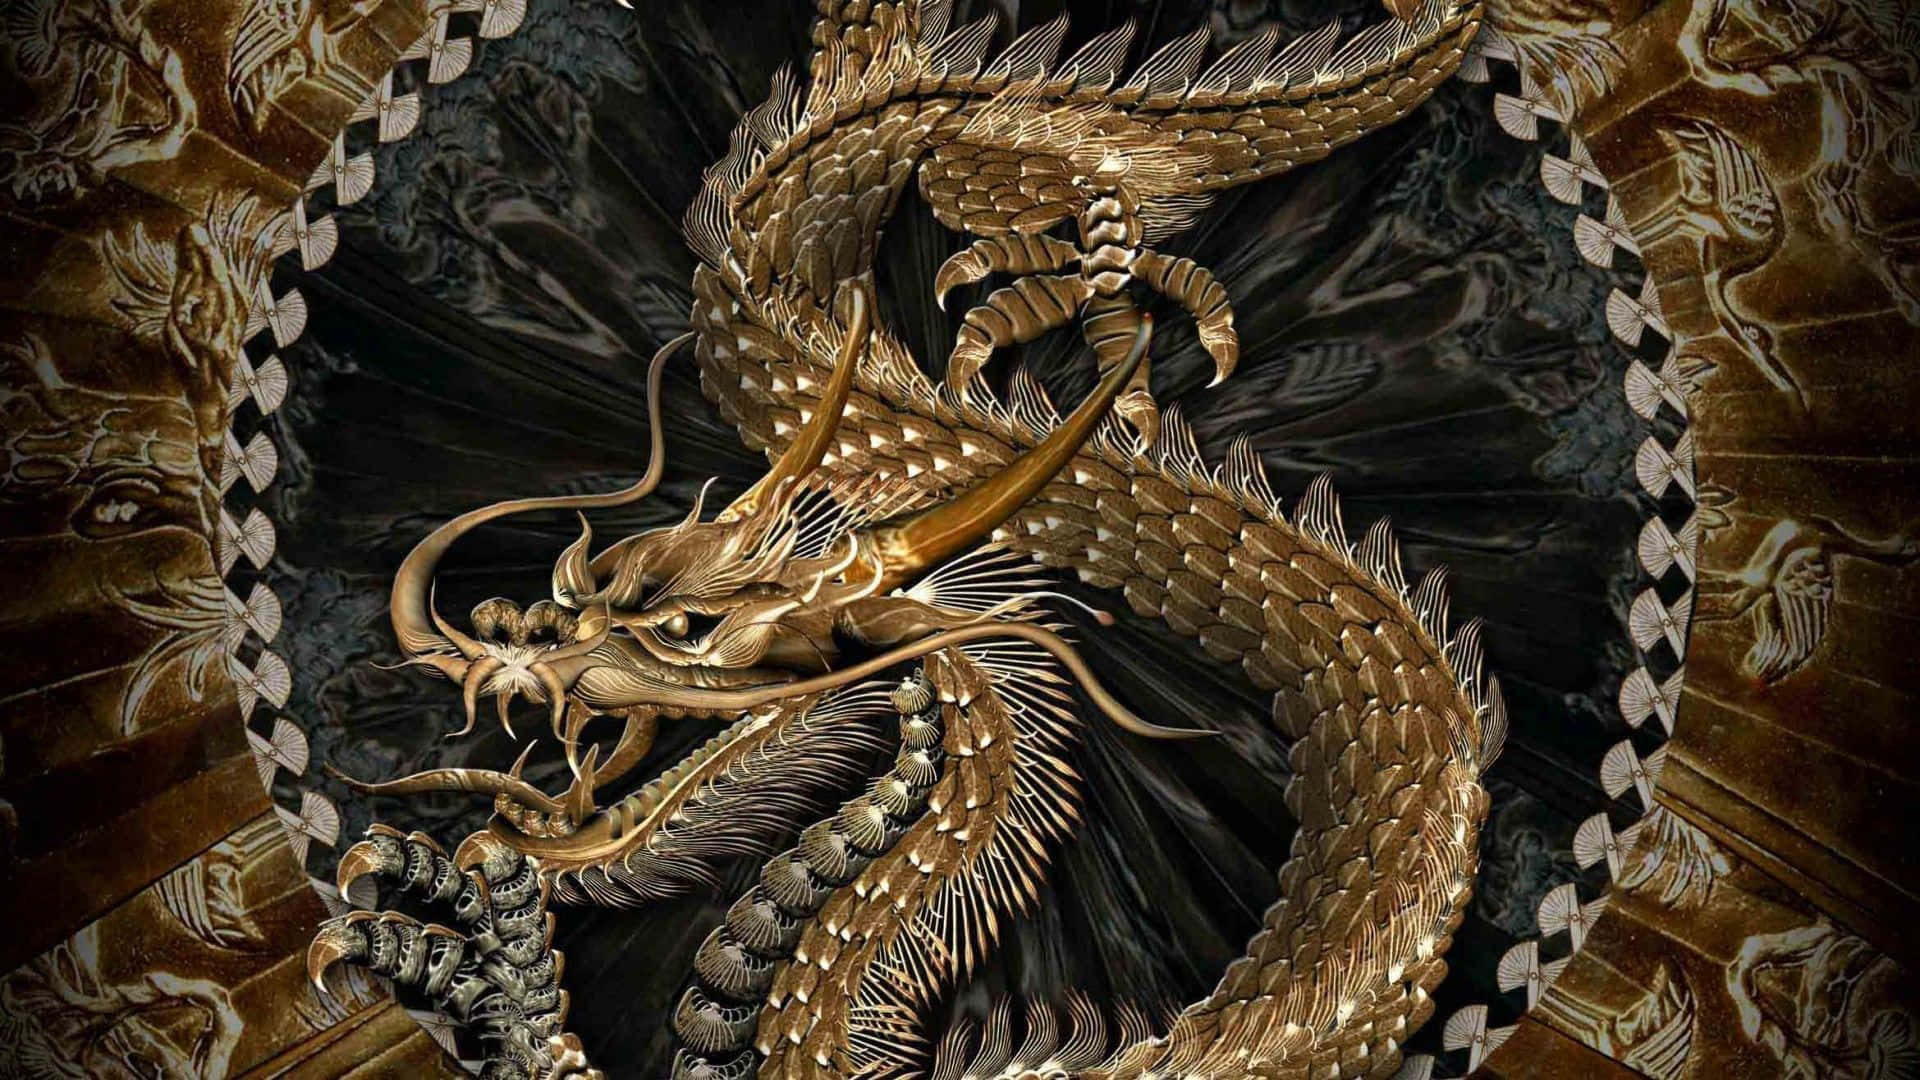 1080p Stunning Golden Dragon Wallpaper